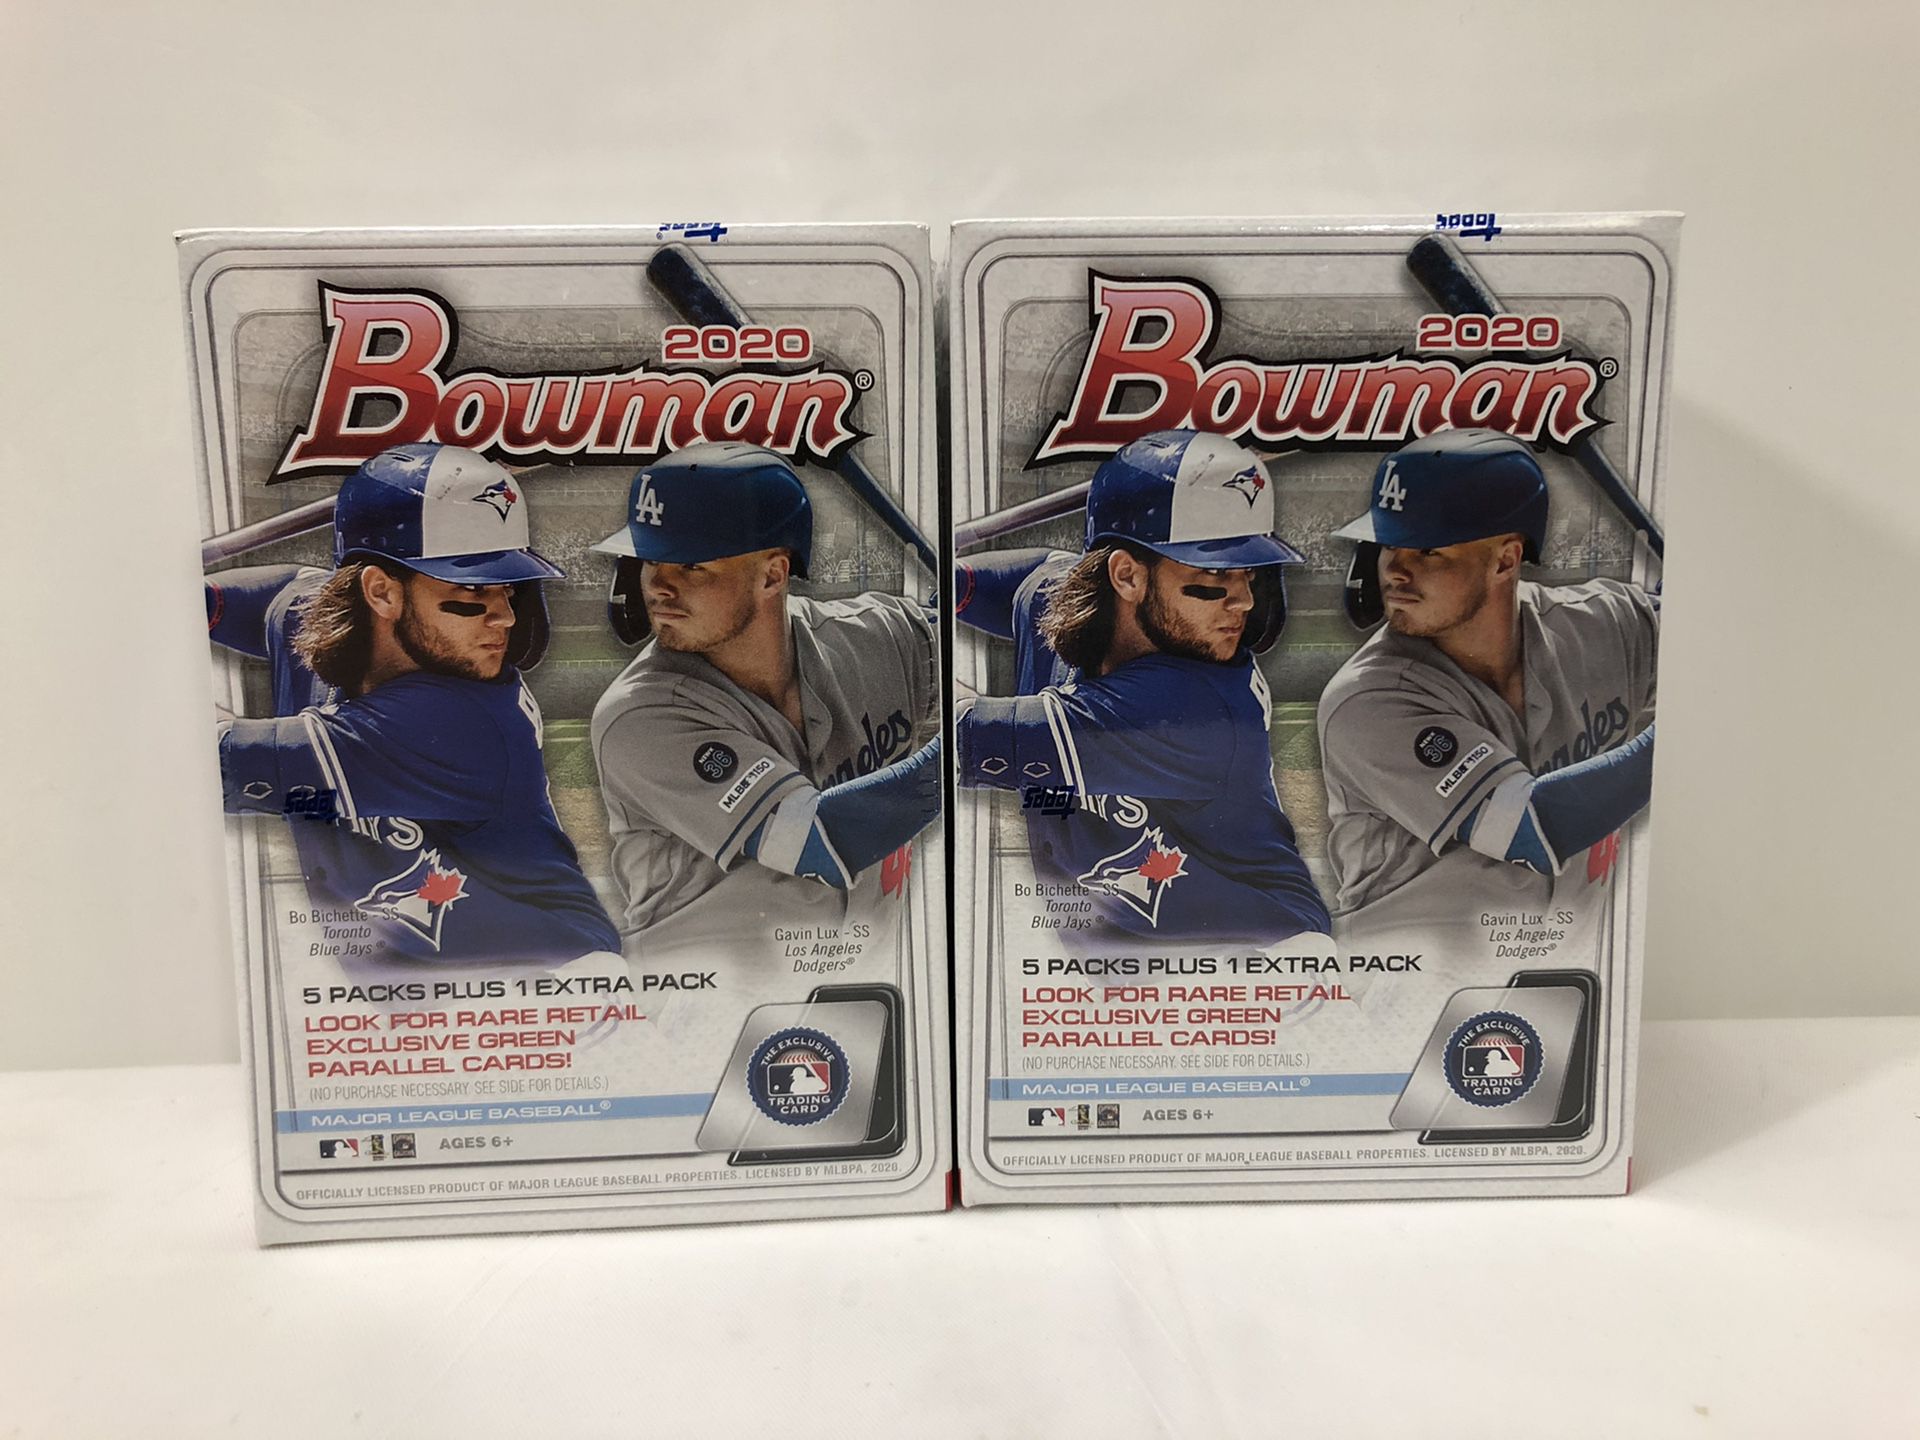 (2) boxes Topps MLB cards 2020 Bowman Blaster box lot of 2 sealed brand new baseball cards